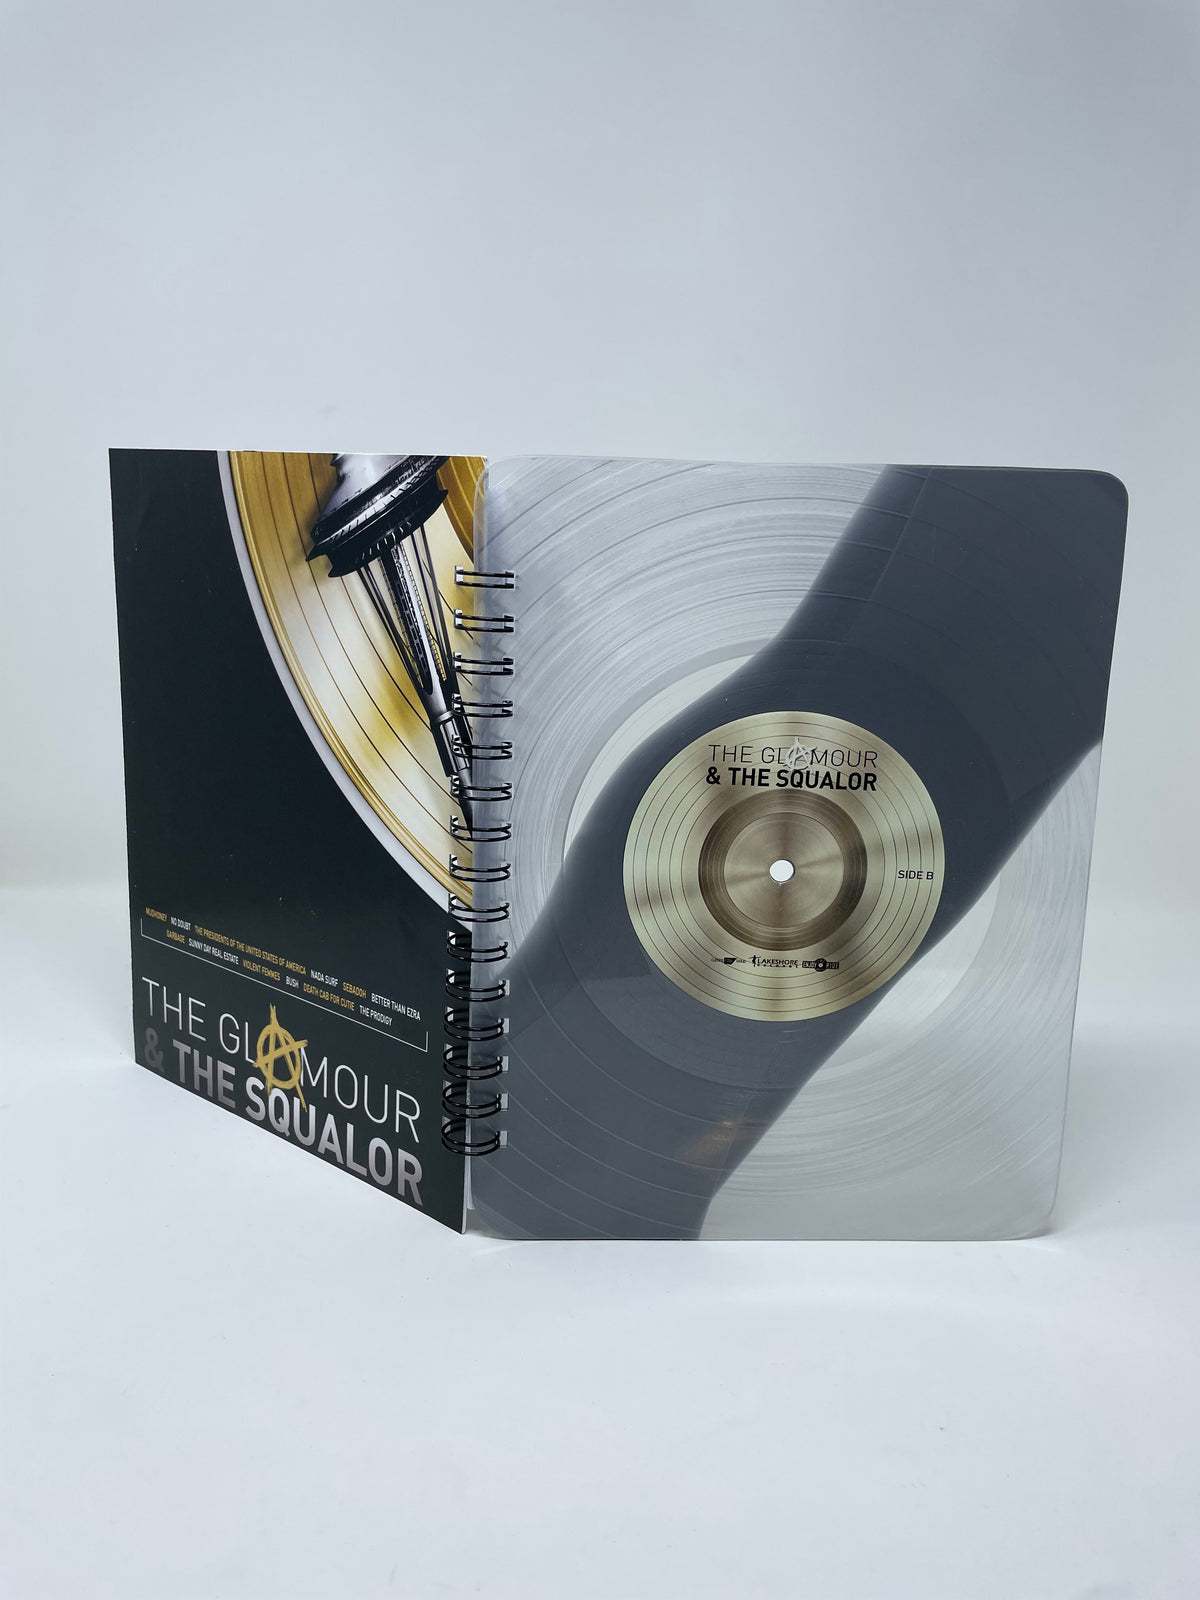 Repurposed Vinyl Lp Spiral Notebook